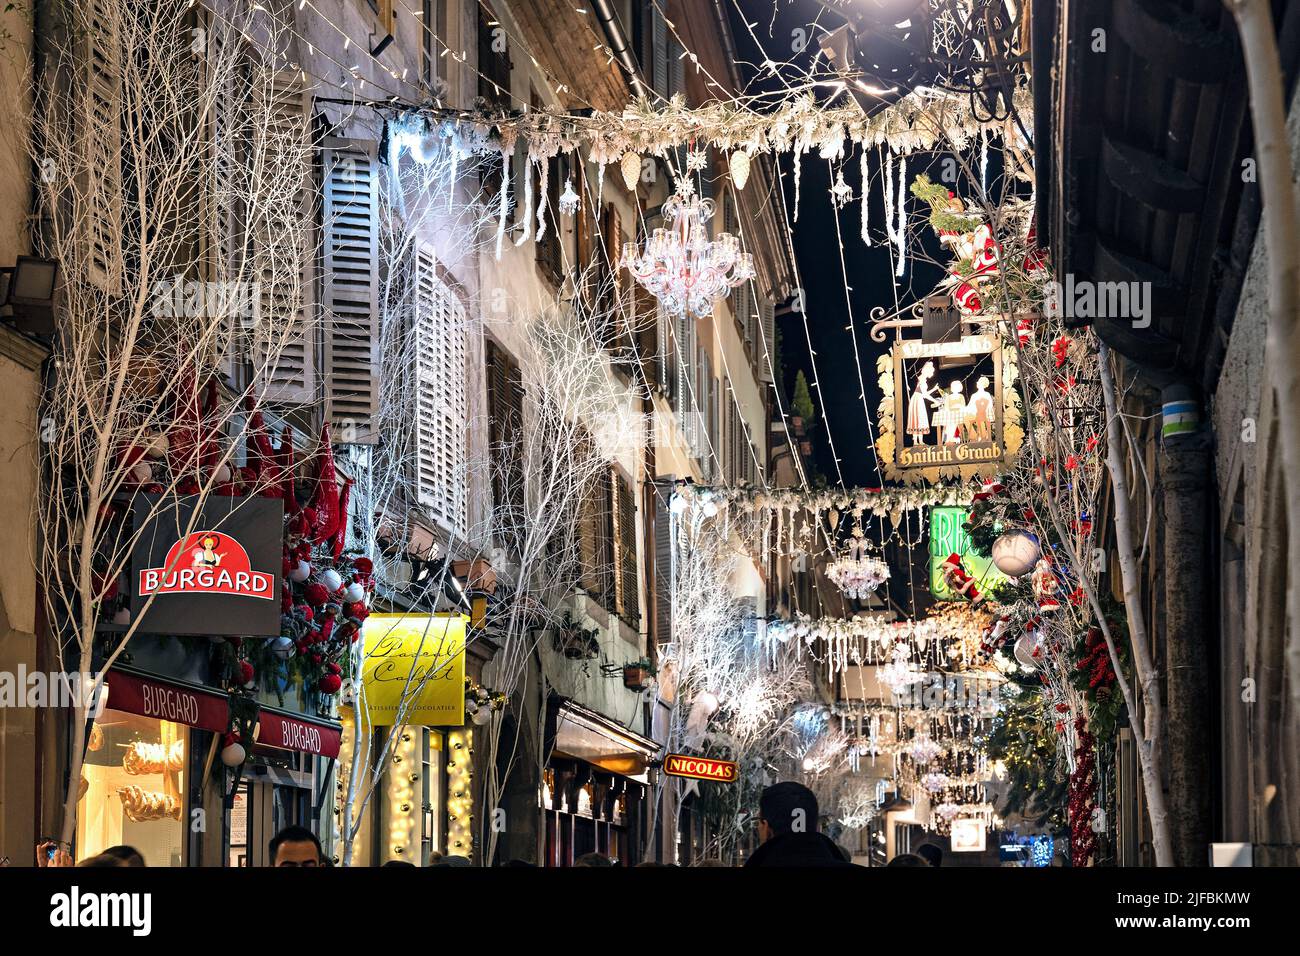 France, Bas Rhin, Strasbourg, Christmas market, decorations and illuminations. Stock Photo